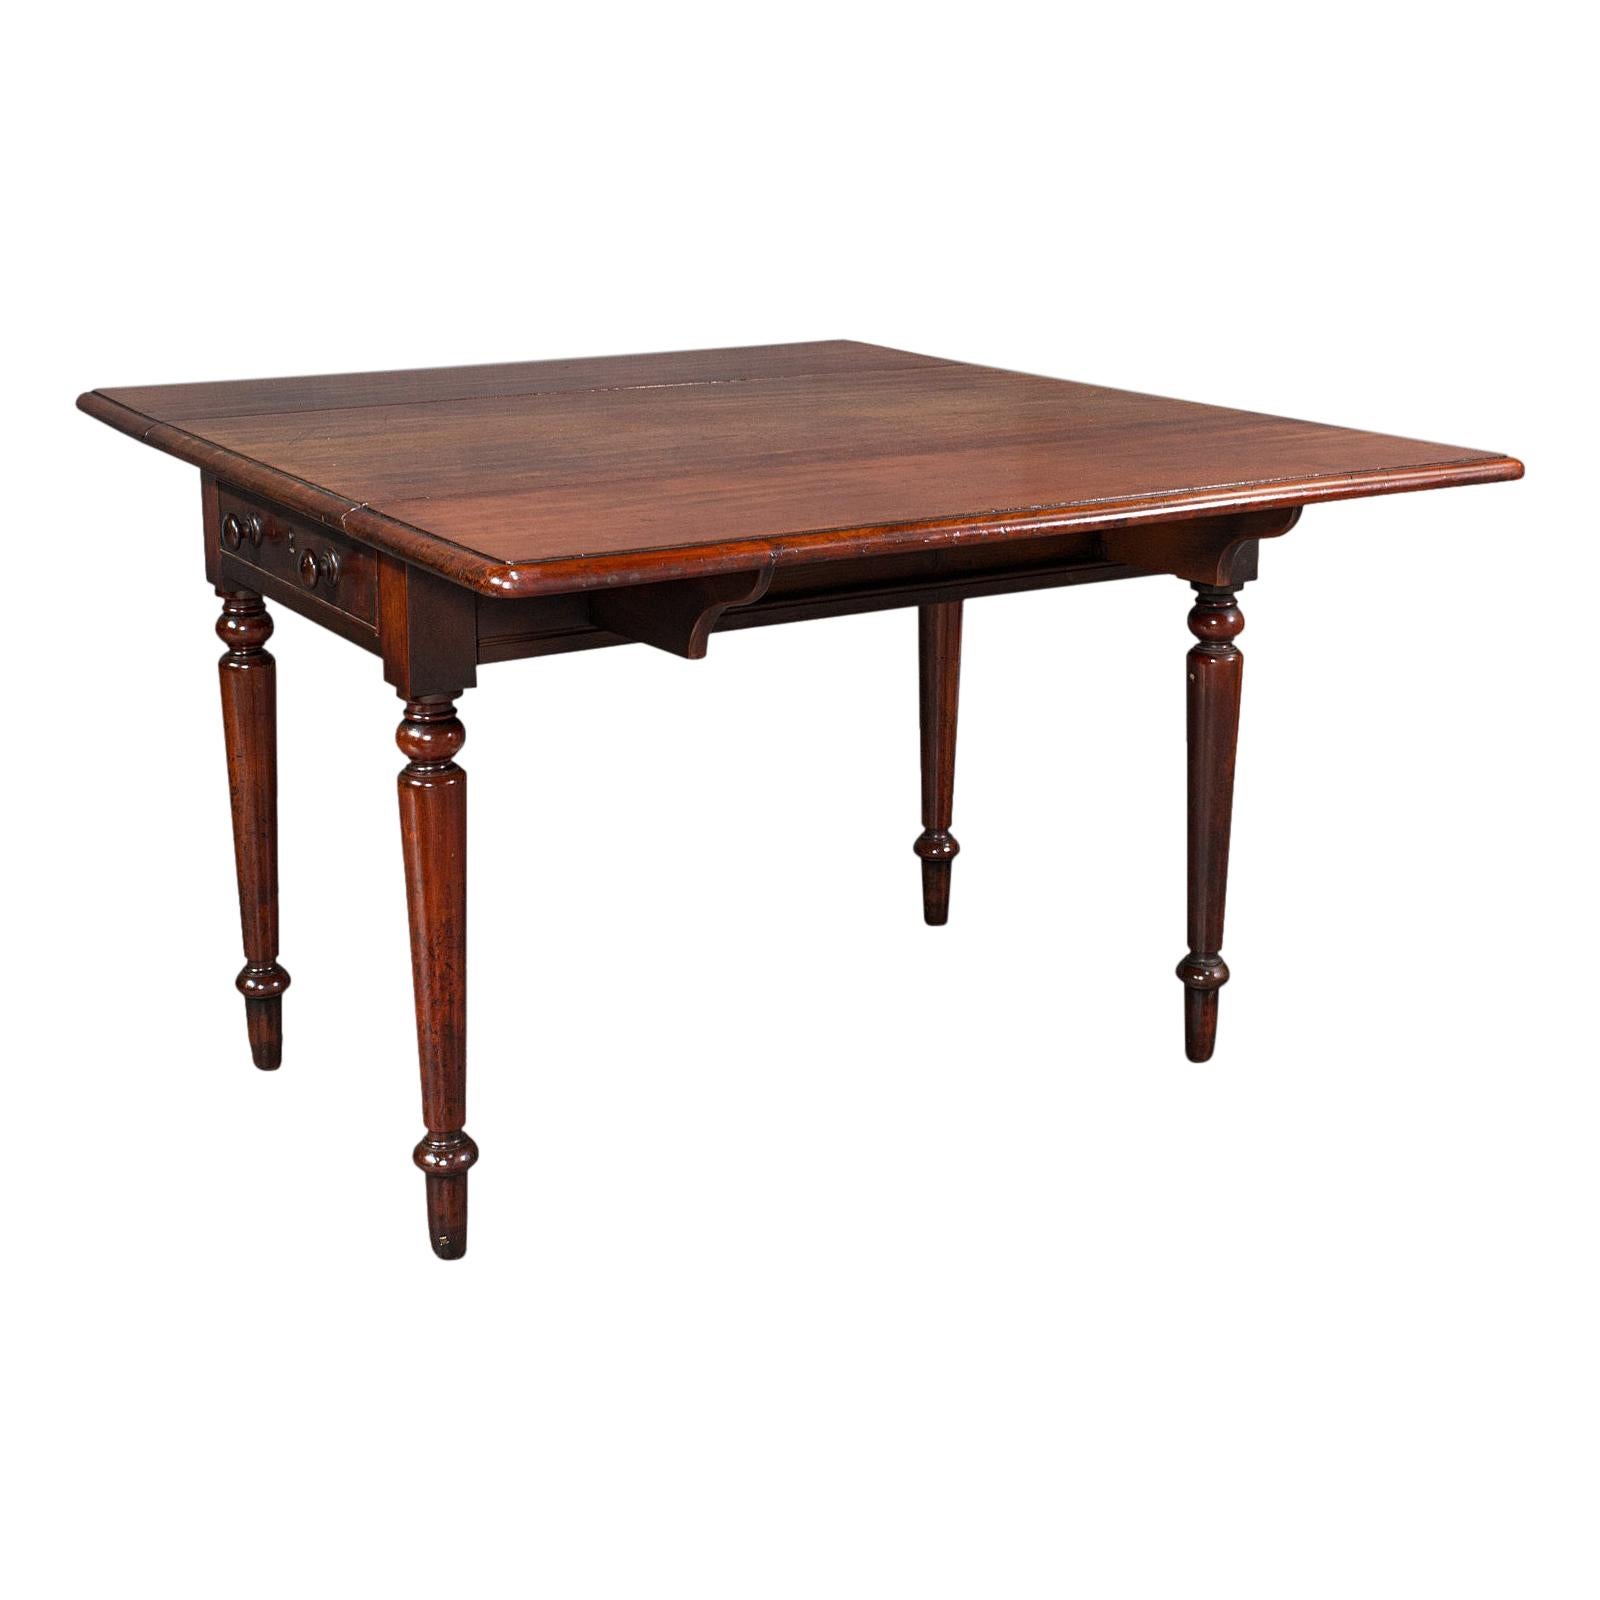 Antique Pembroke Table, English, Mahogany, Extending, Dining, Regency, C.1820 For Sale